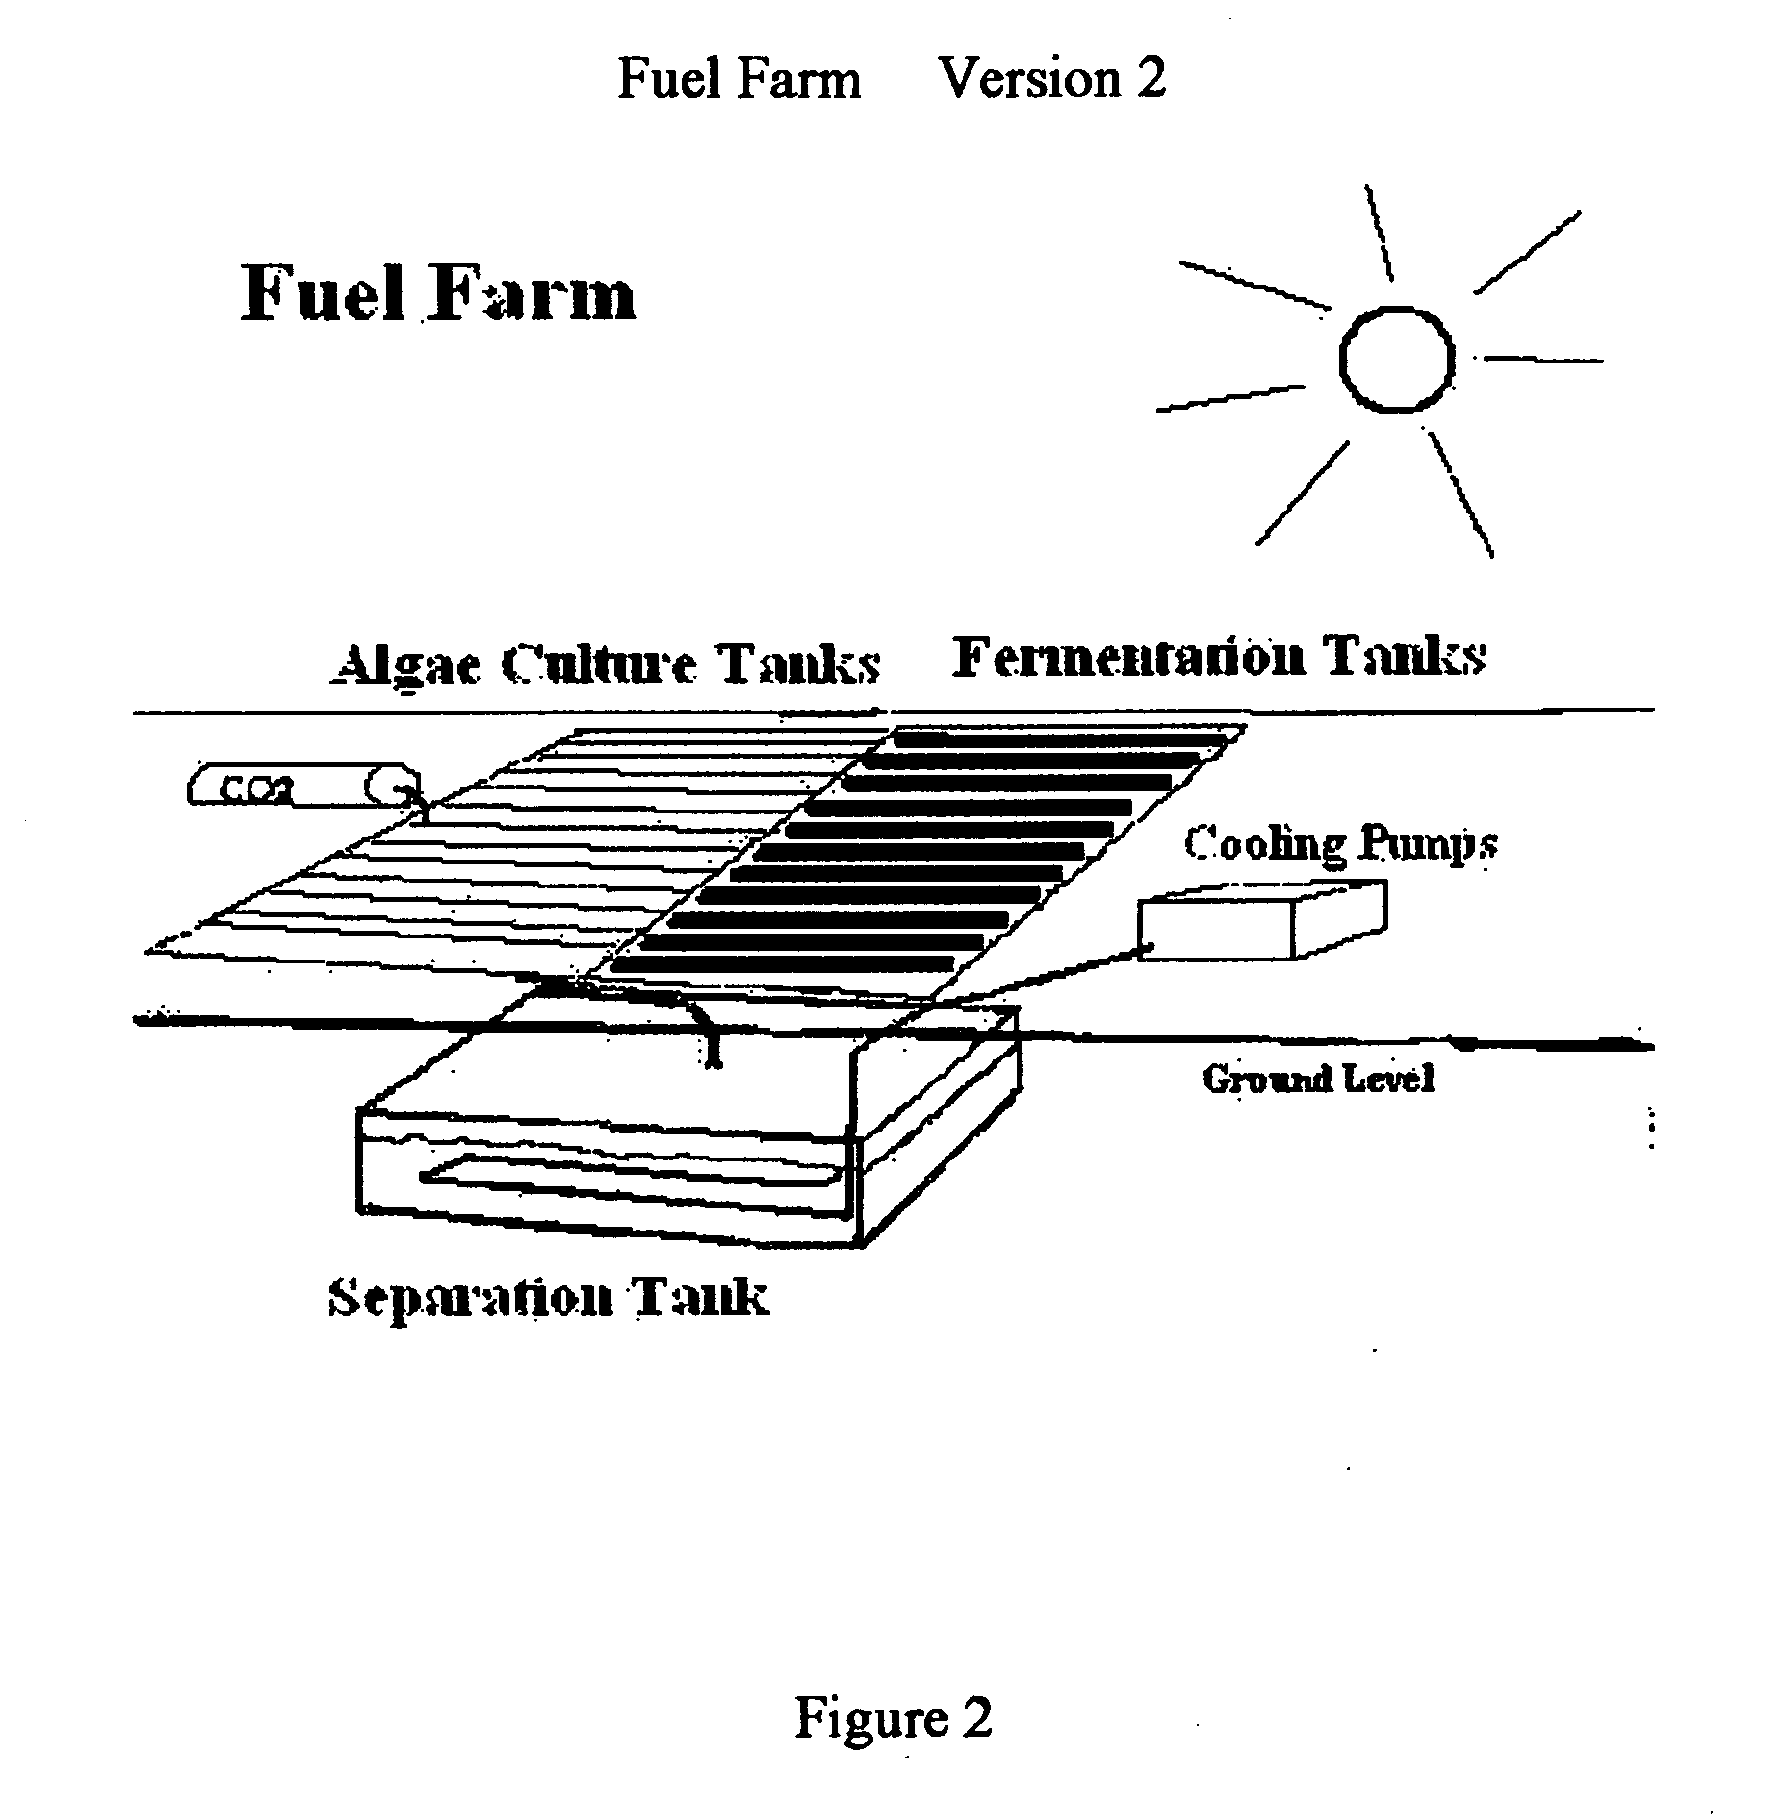 Fuel farm